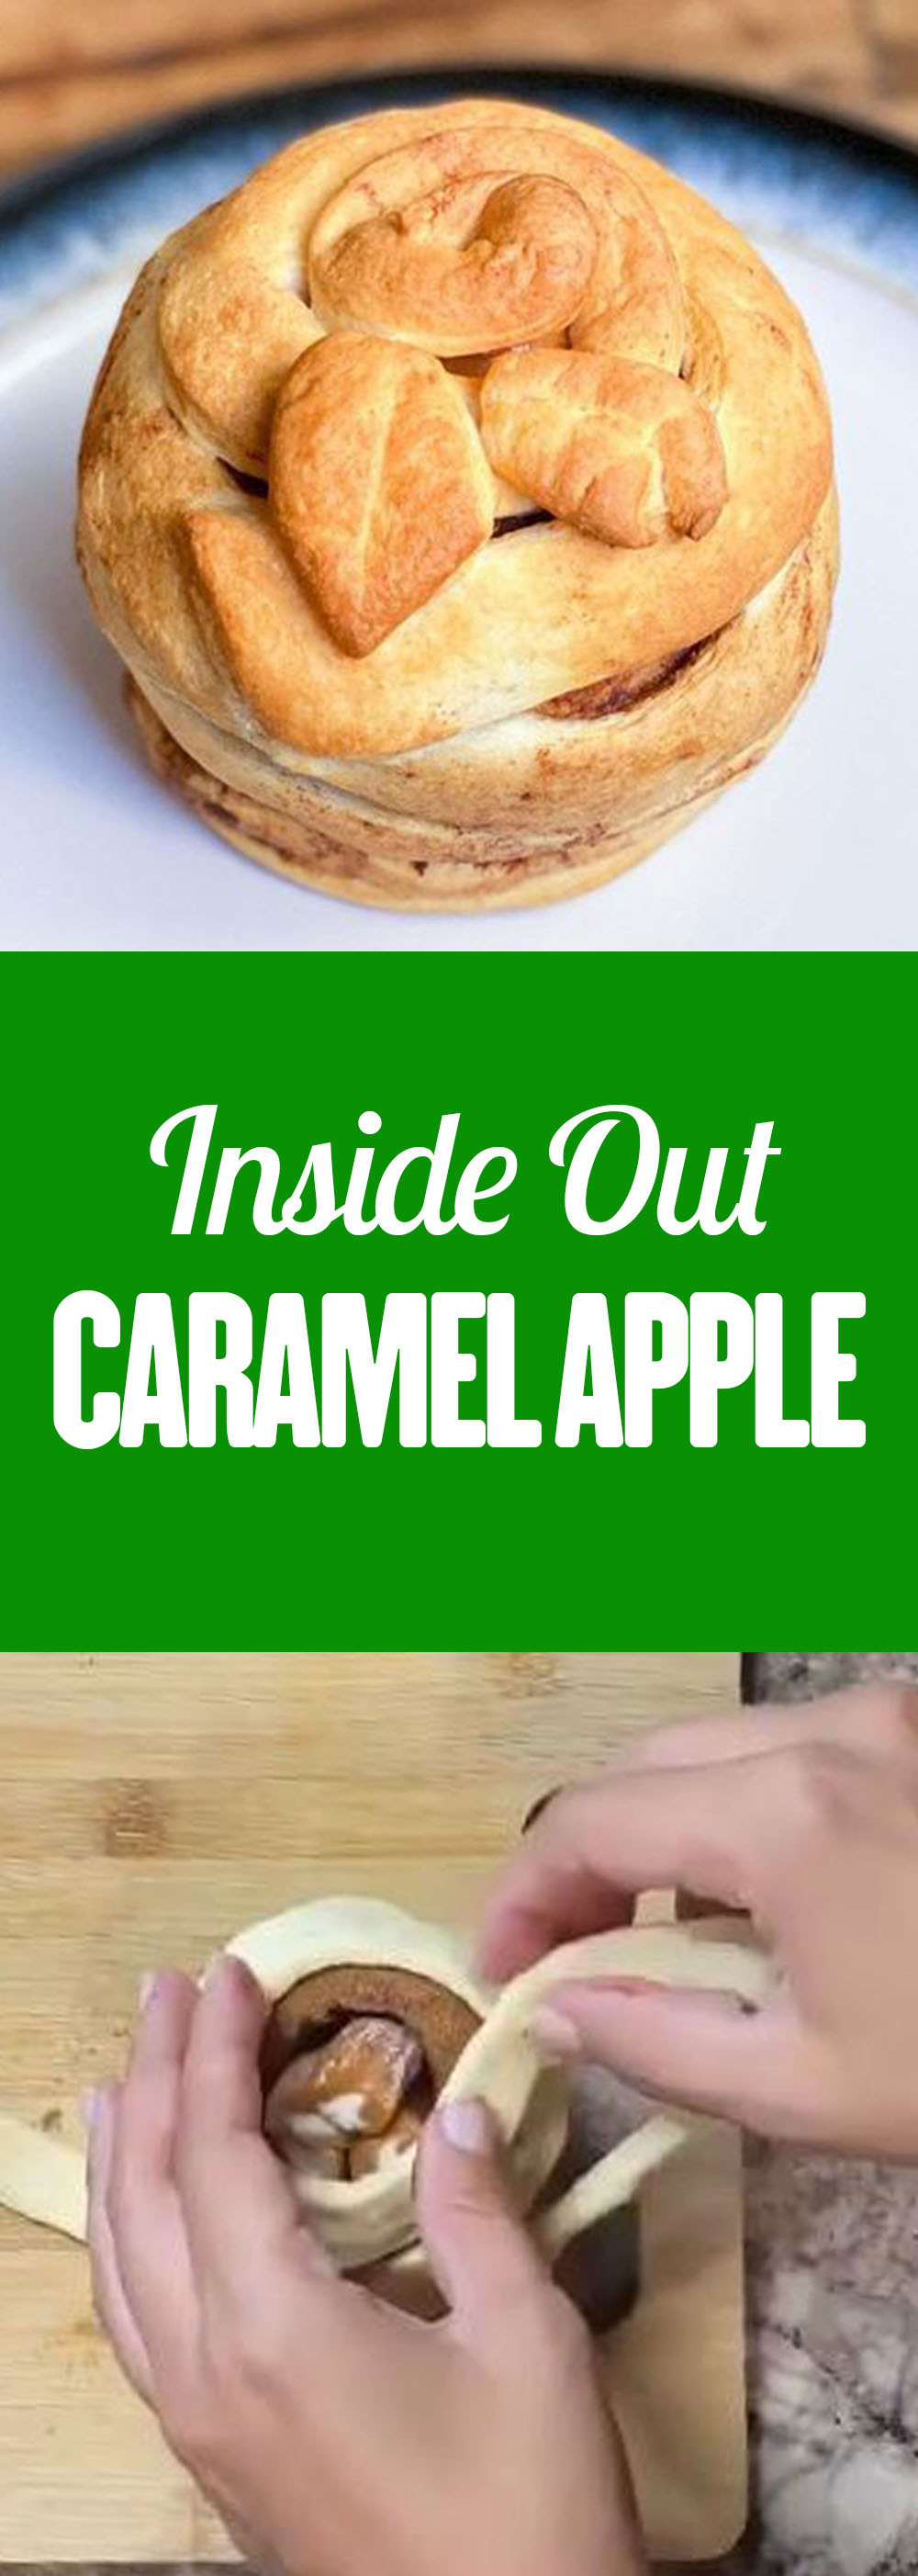 inside-out-caramel-apple-pinterest